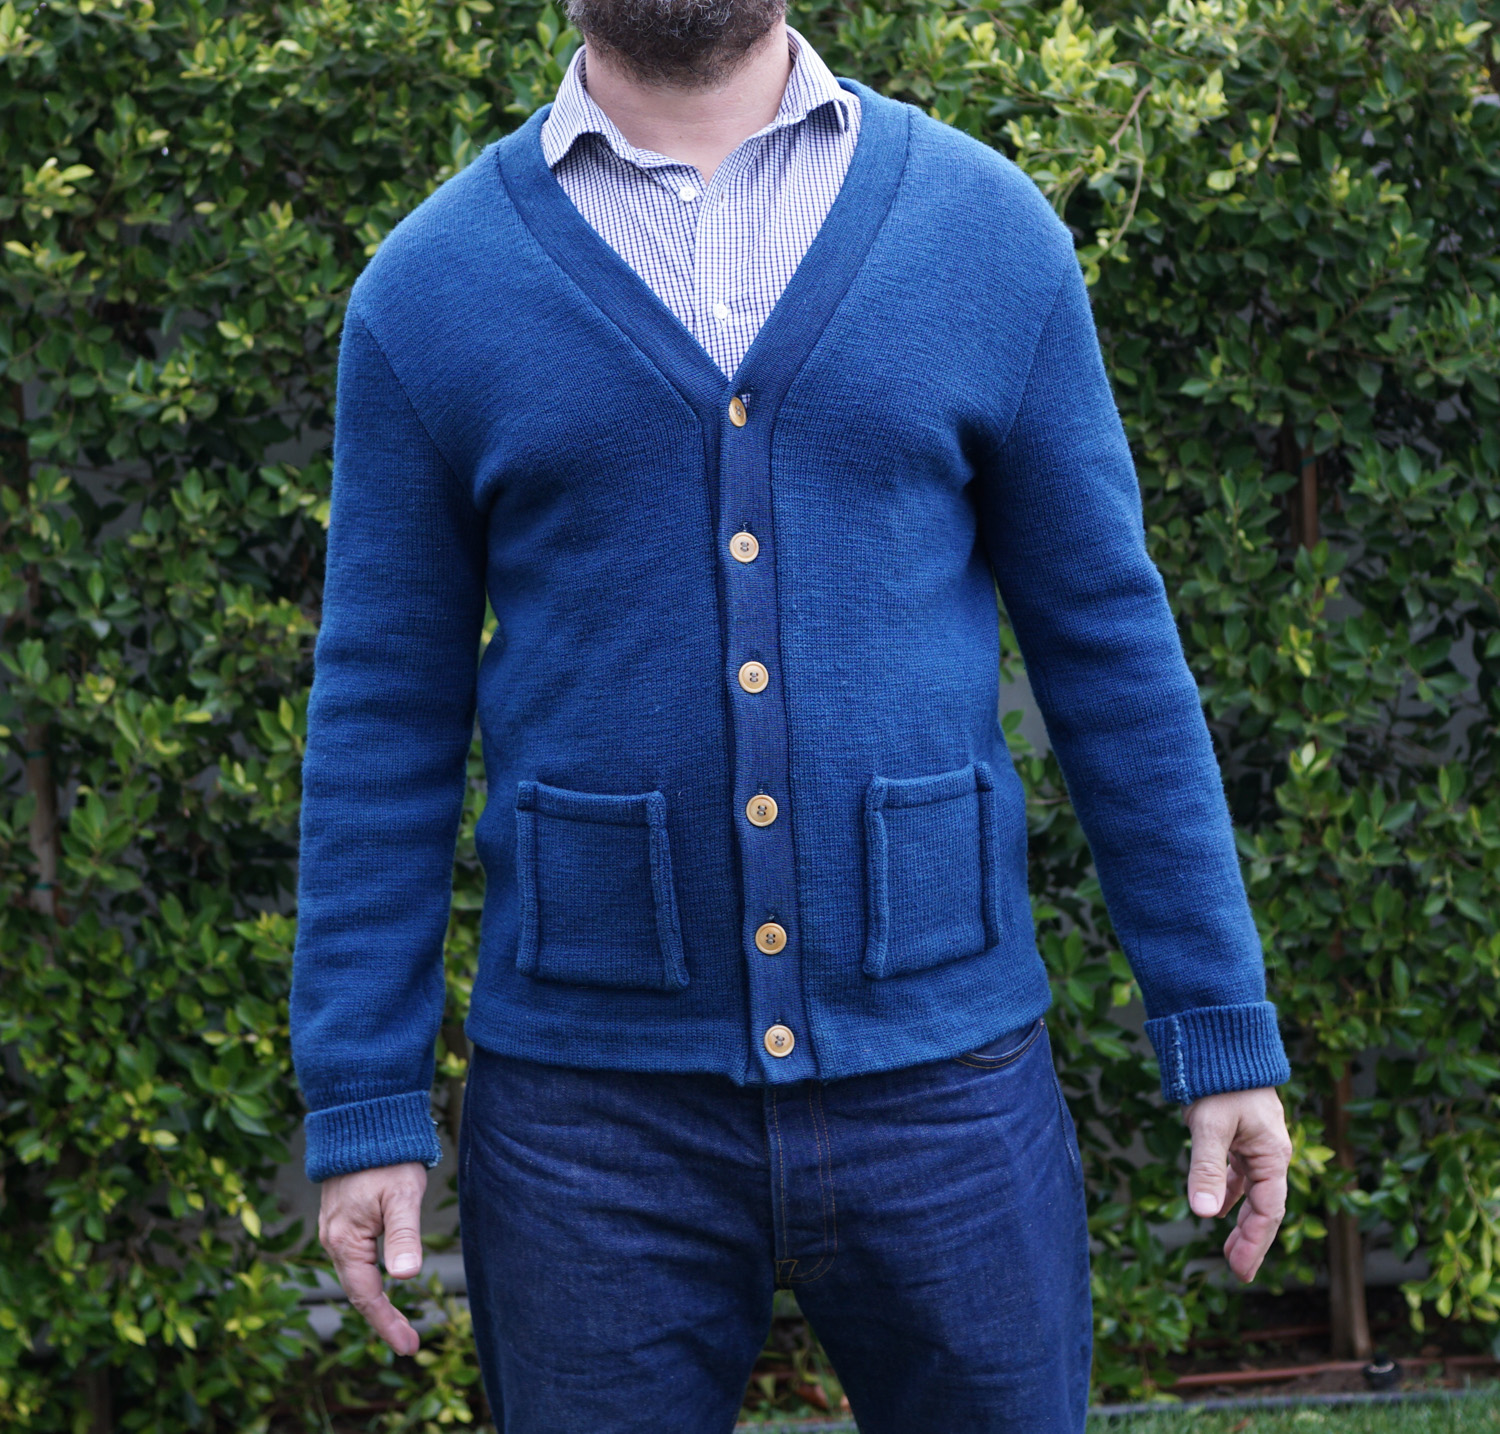 Mister Freedom Campus Cardigan Sweater in Indigo - Size XL | The Fedora ...